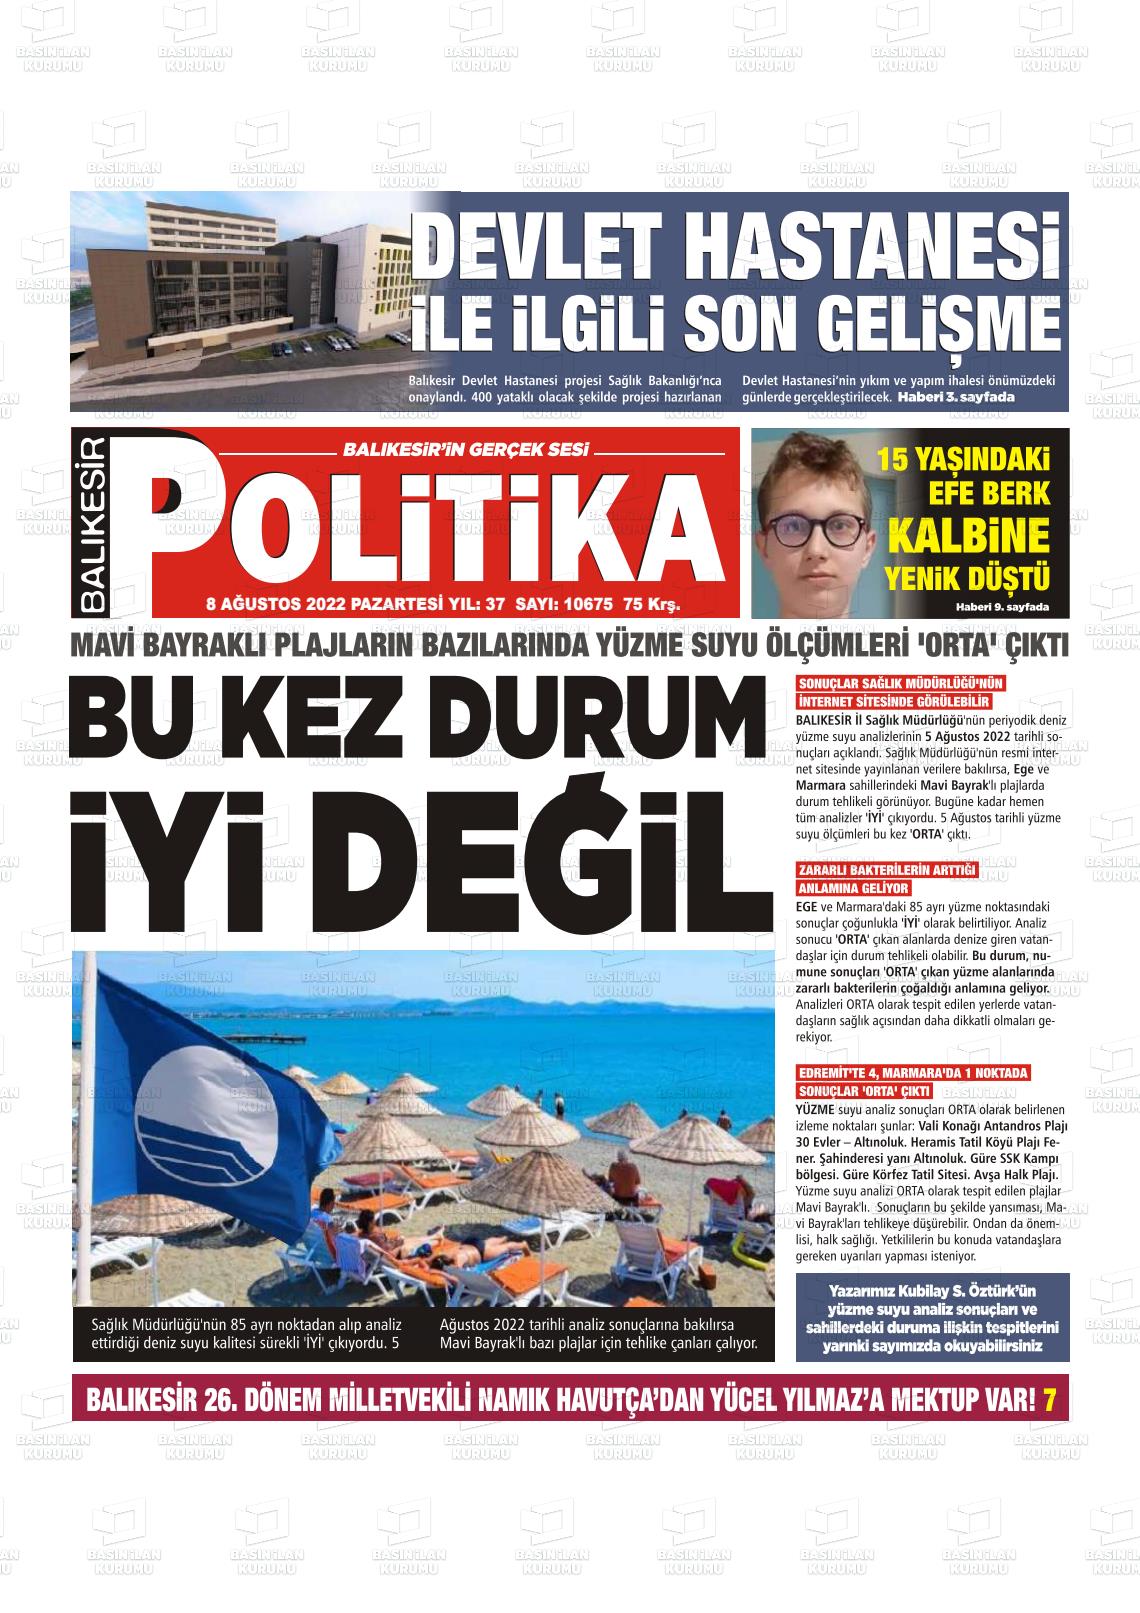 08 Ağustos 2022 Balıkesir Politika Gazete Manşeti